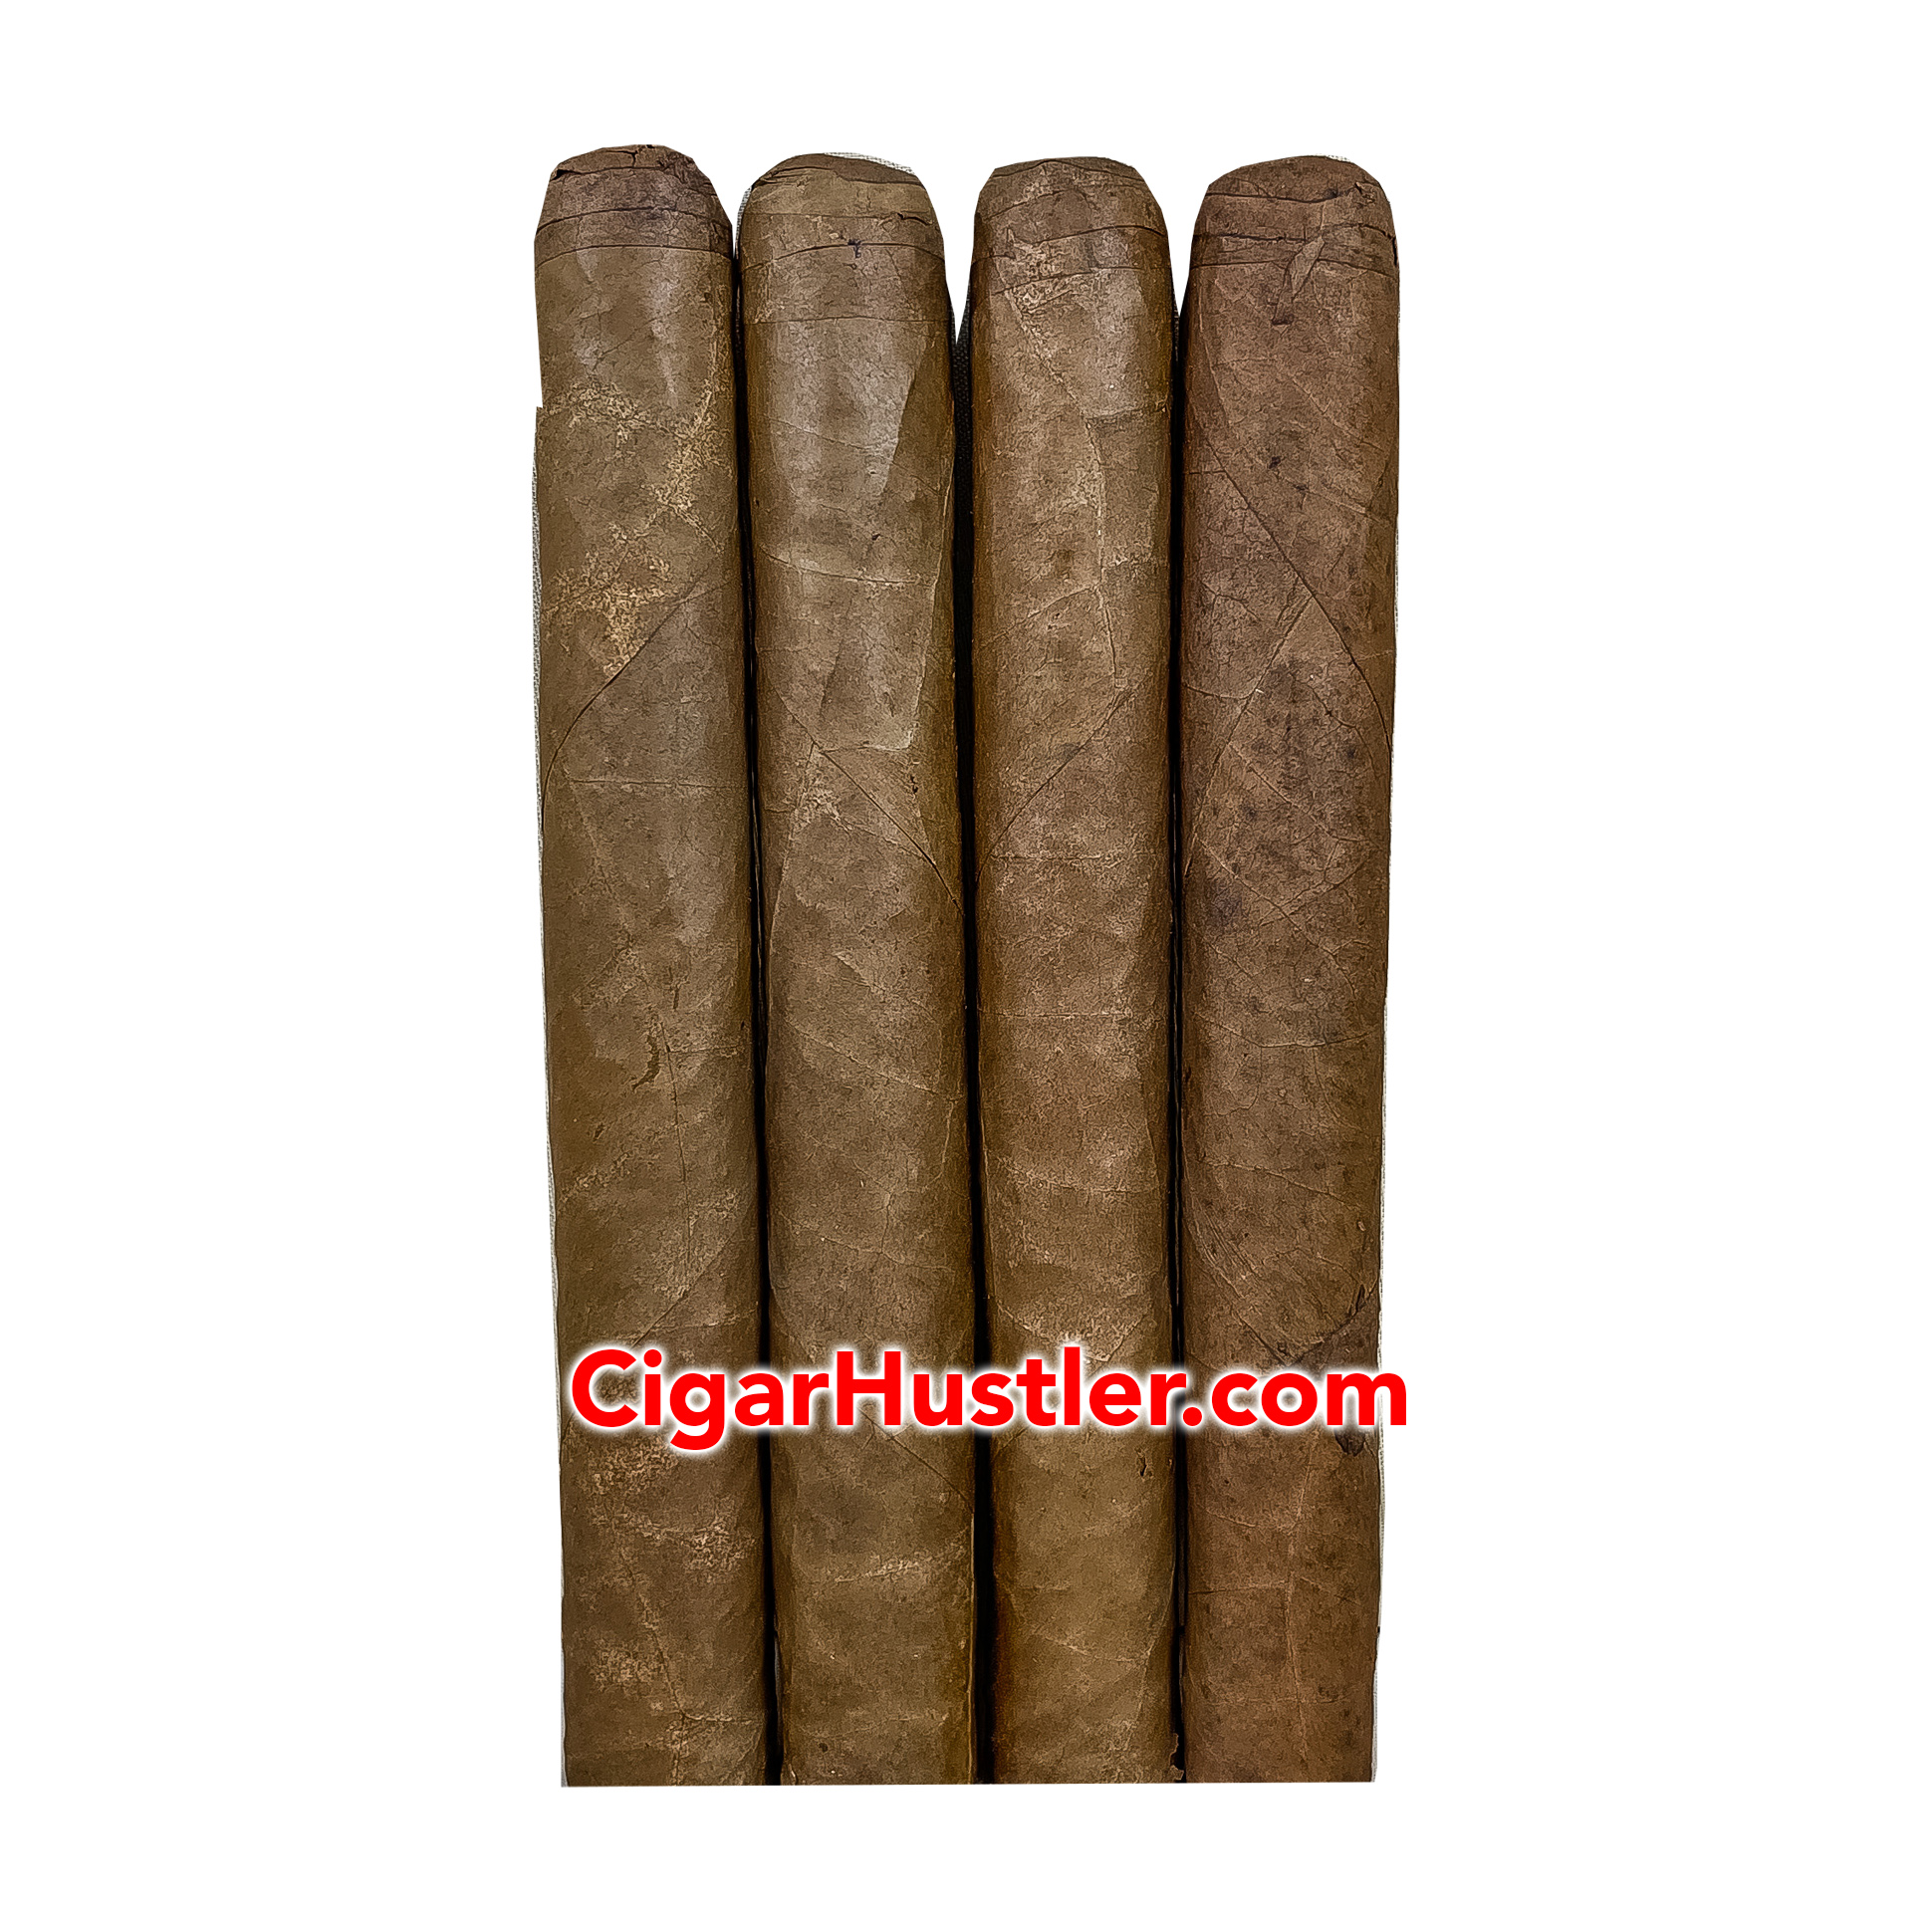 Cigar Hustler Private Blend Habano Toro Cigar - 4 Pack